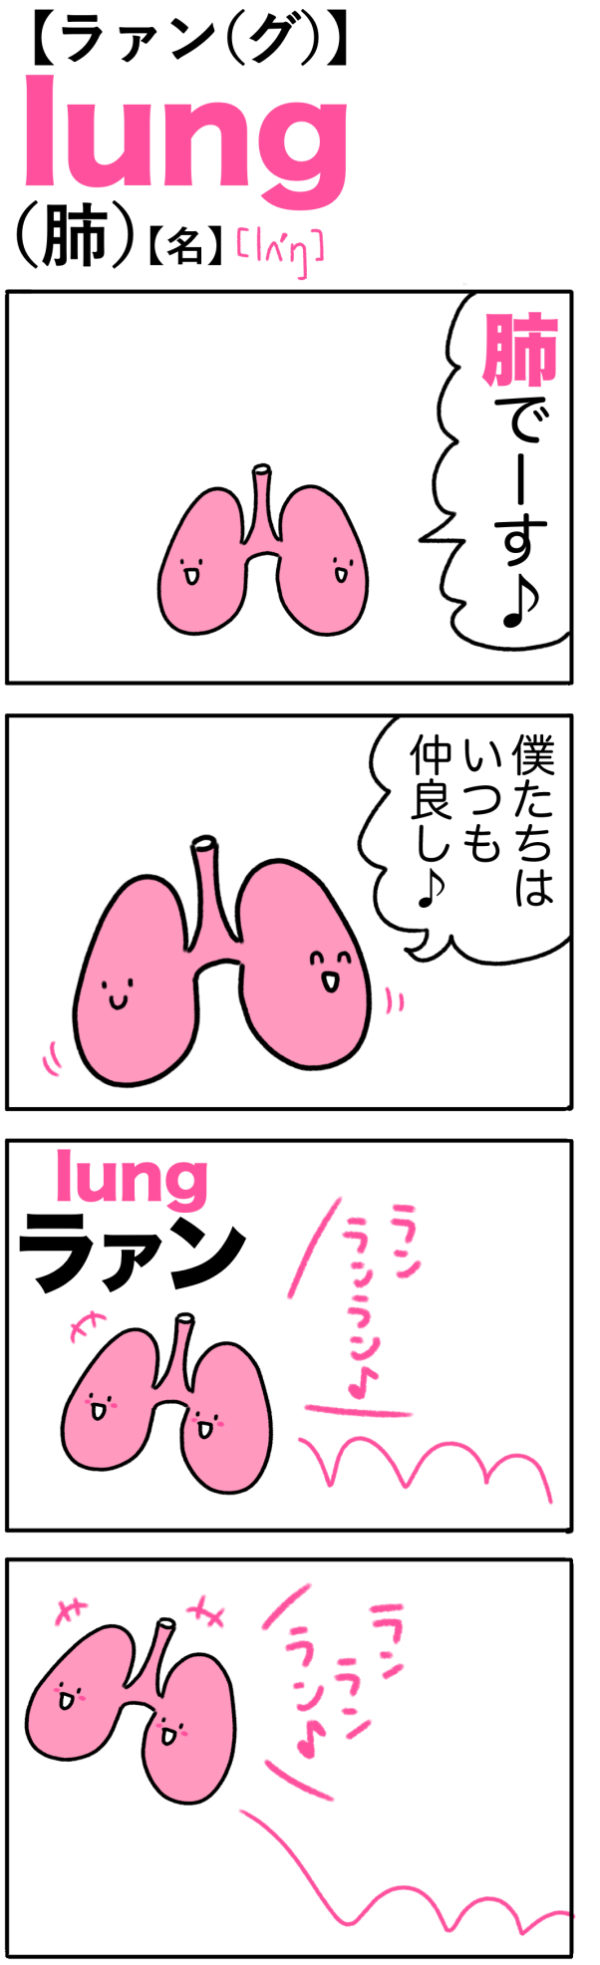 lung（肺）の語呂合わせ英単語